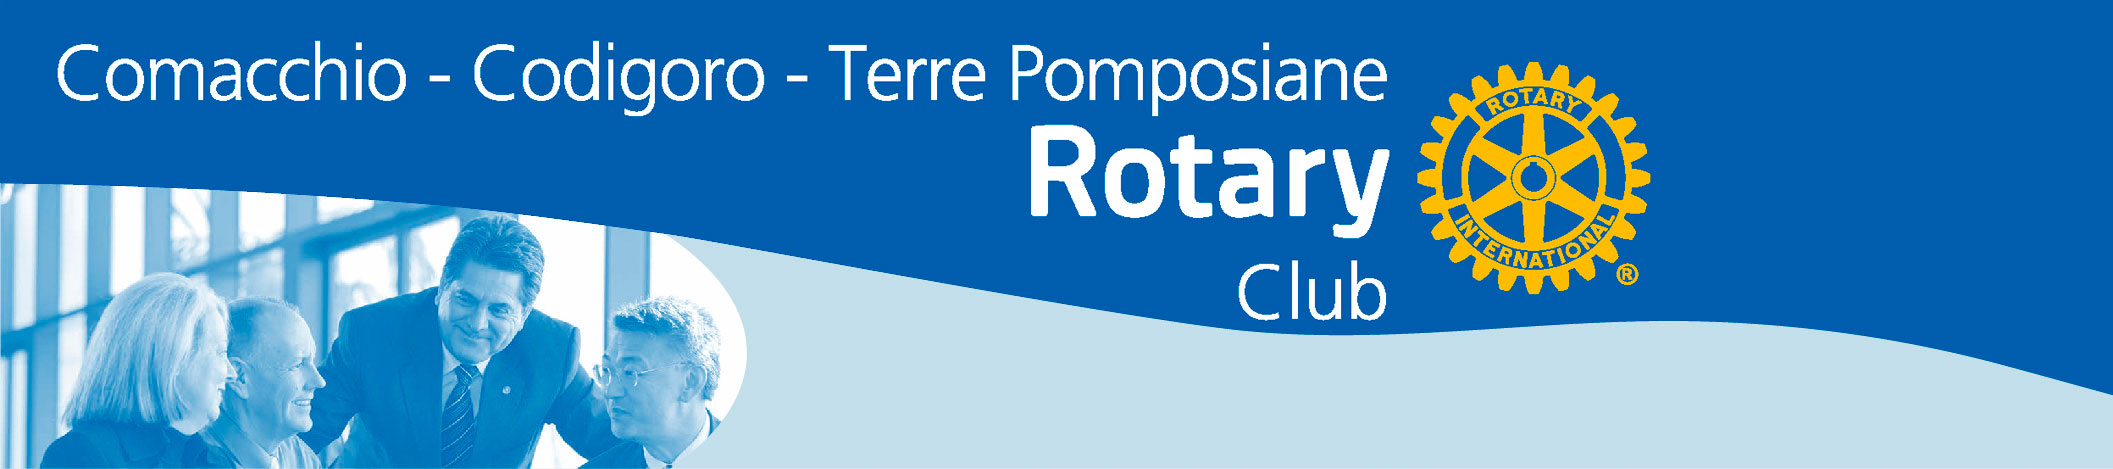 Rotary Club International - Rotary Comacchio, Rotary Migliarino, Rotary Codigoro - Rotary Delta - Rotary Emilia Romagna - Rotary Delta - Club - Iniziative Culturali - Cultura